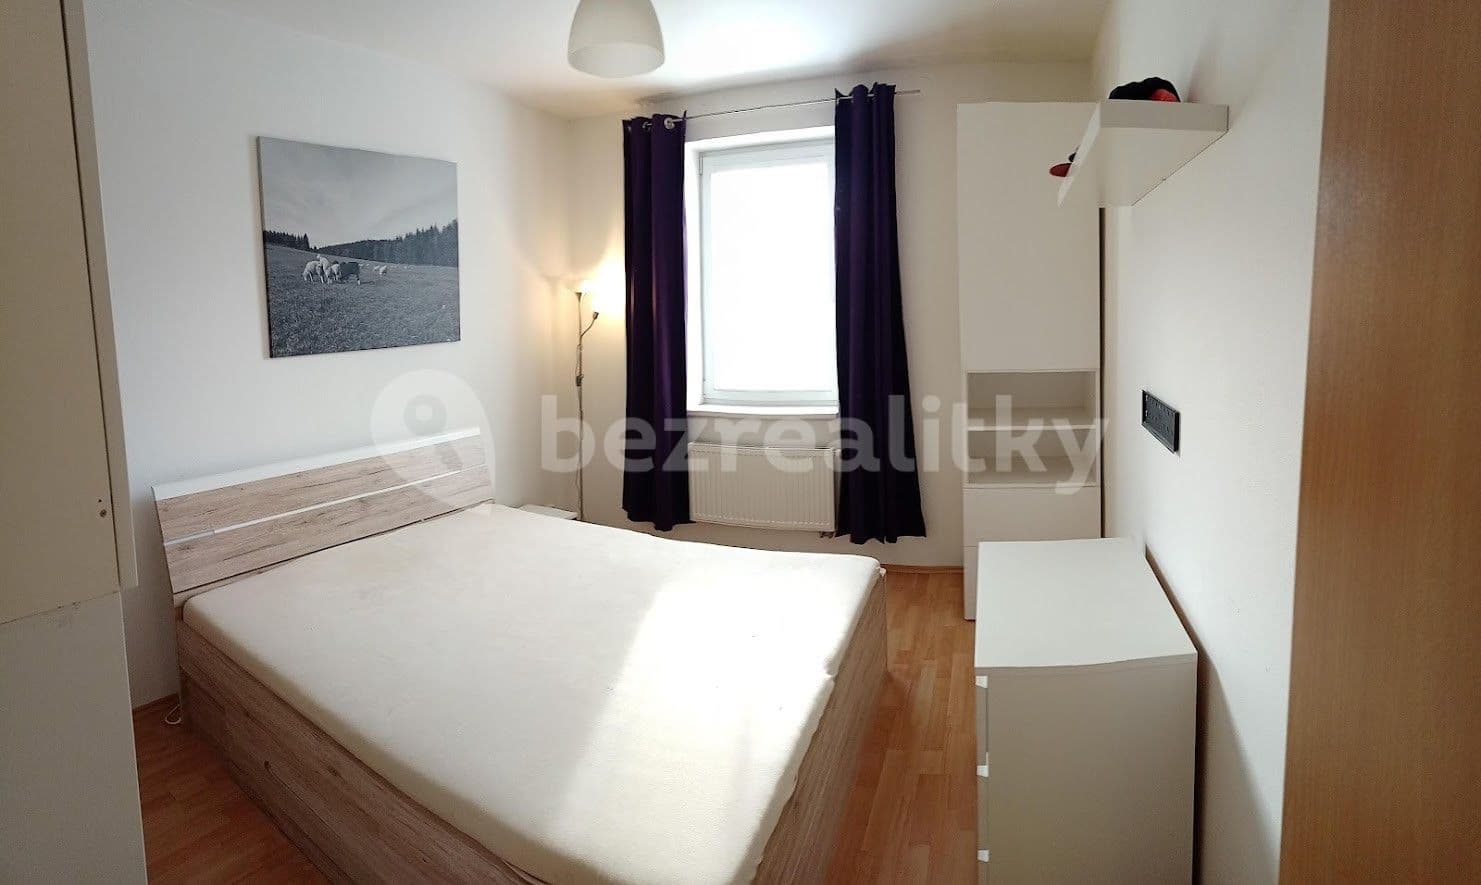 2 bedroom flat for sale, 50 m², Ježovská, Prague, Prague